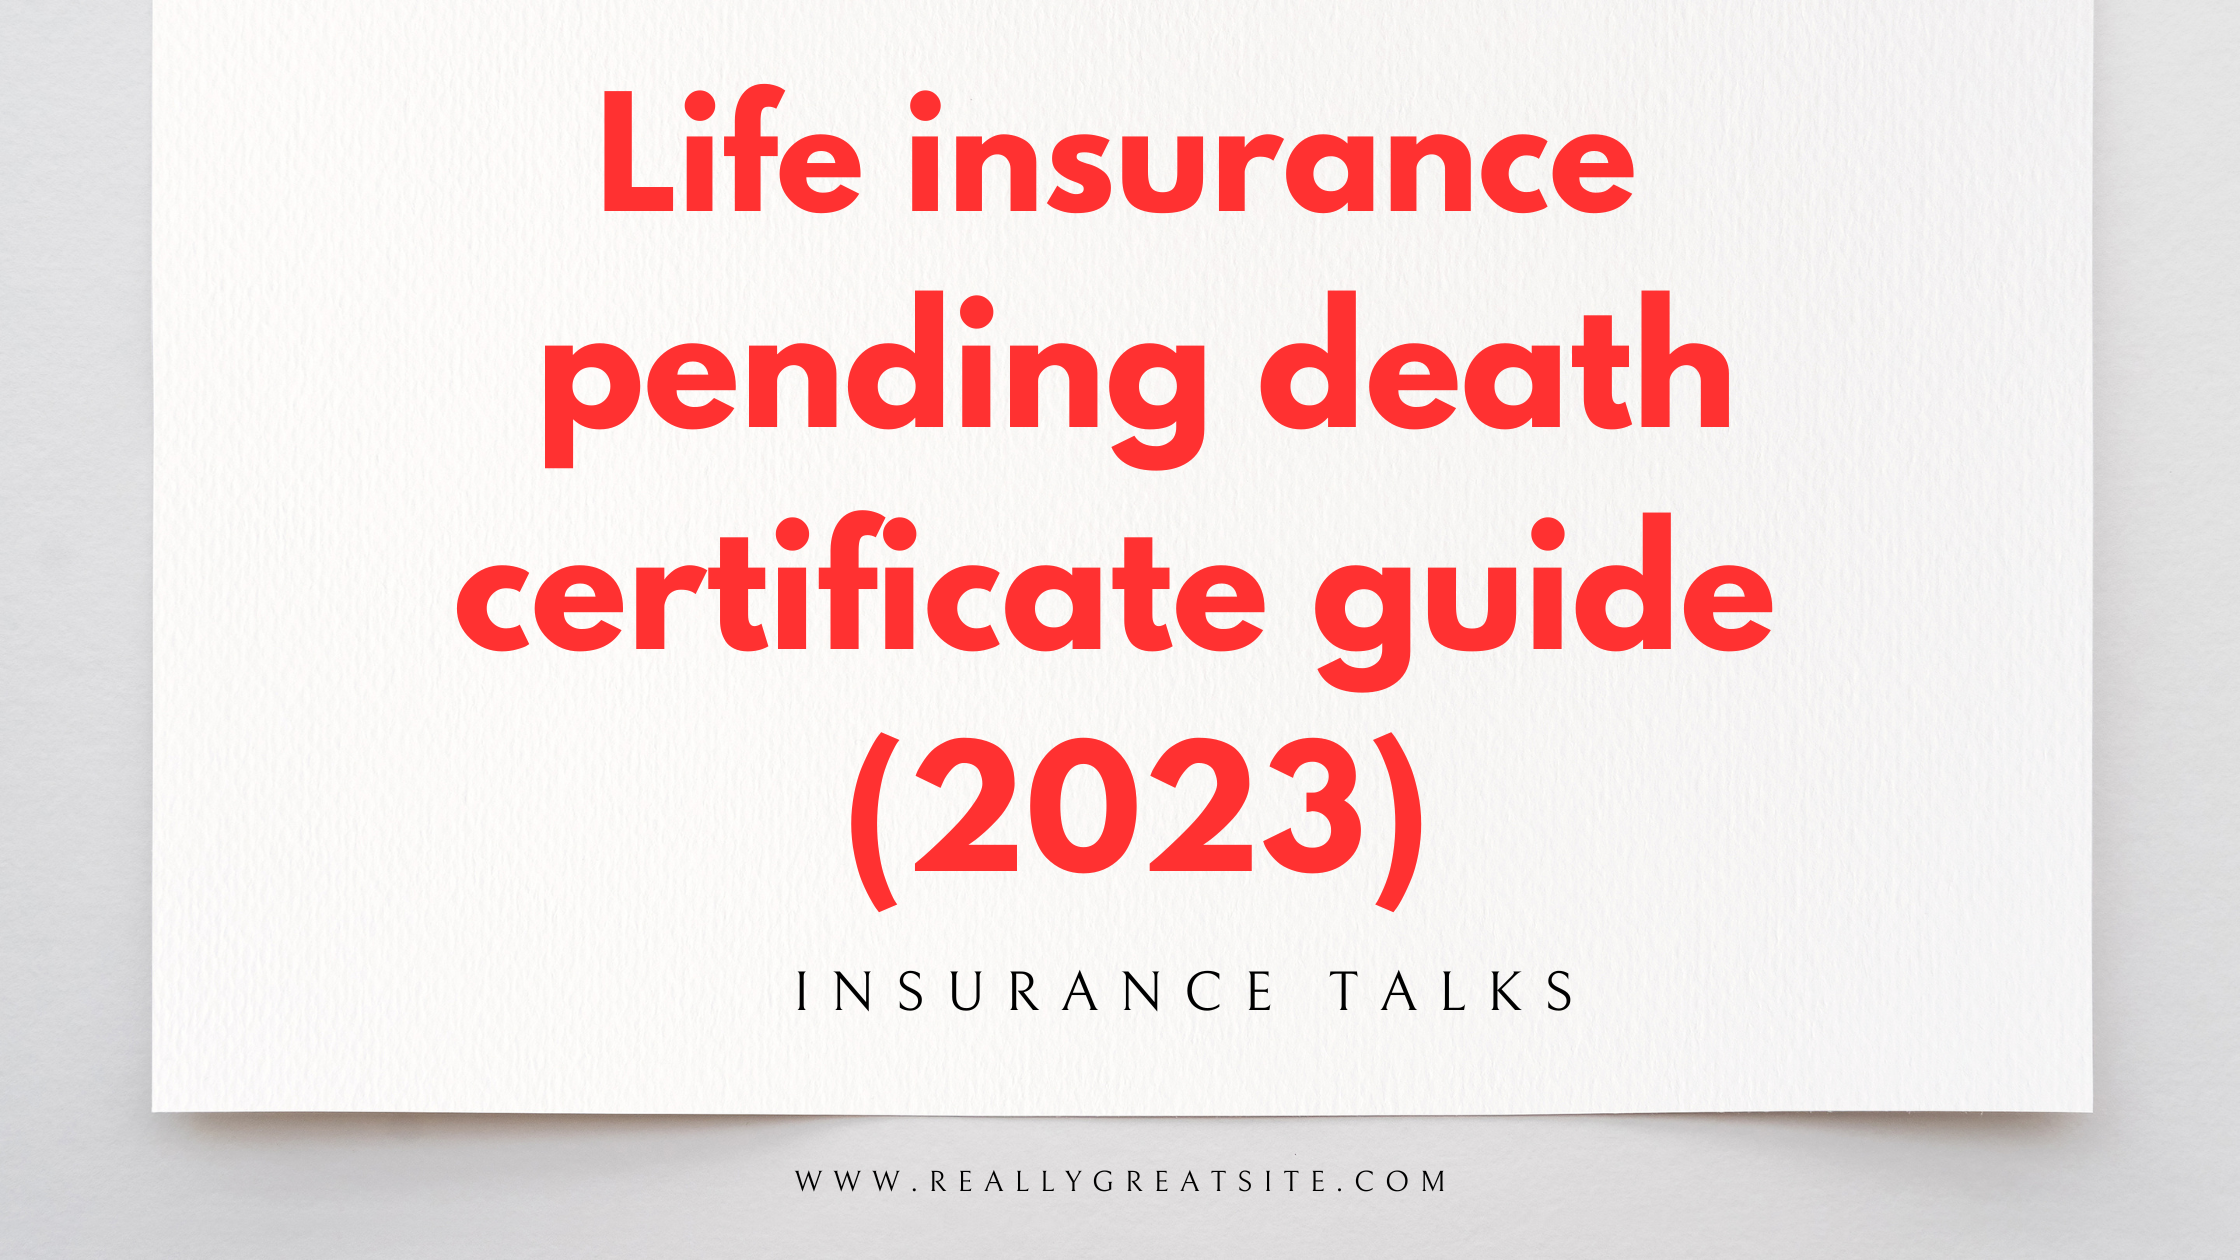 Life insurance pending death certificate guide (2023)